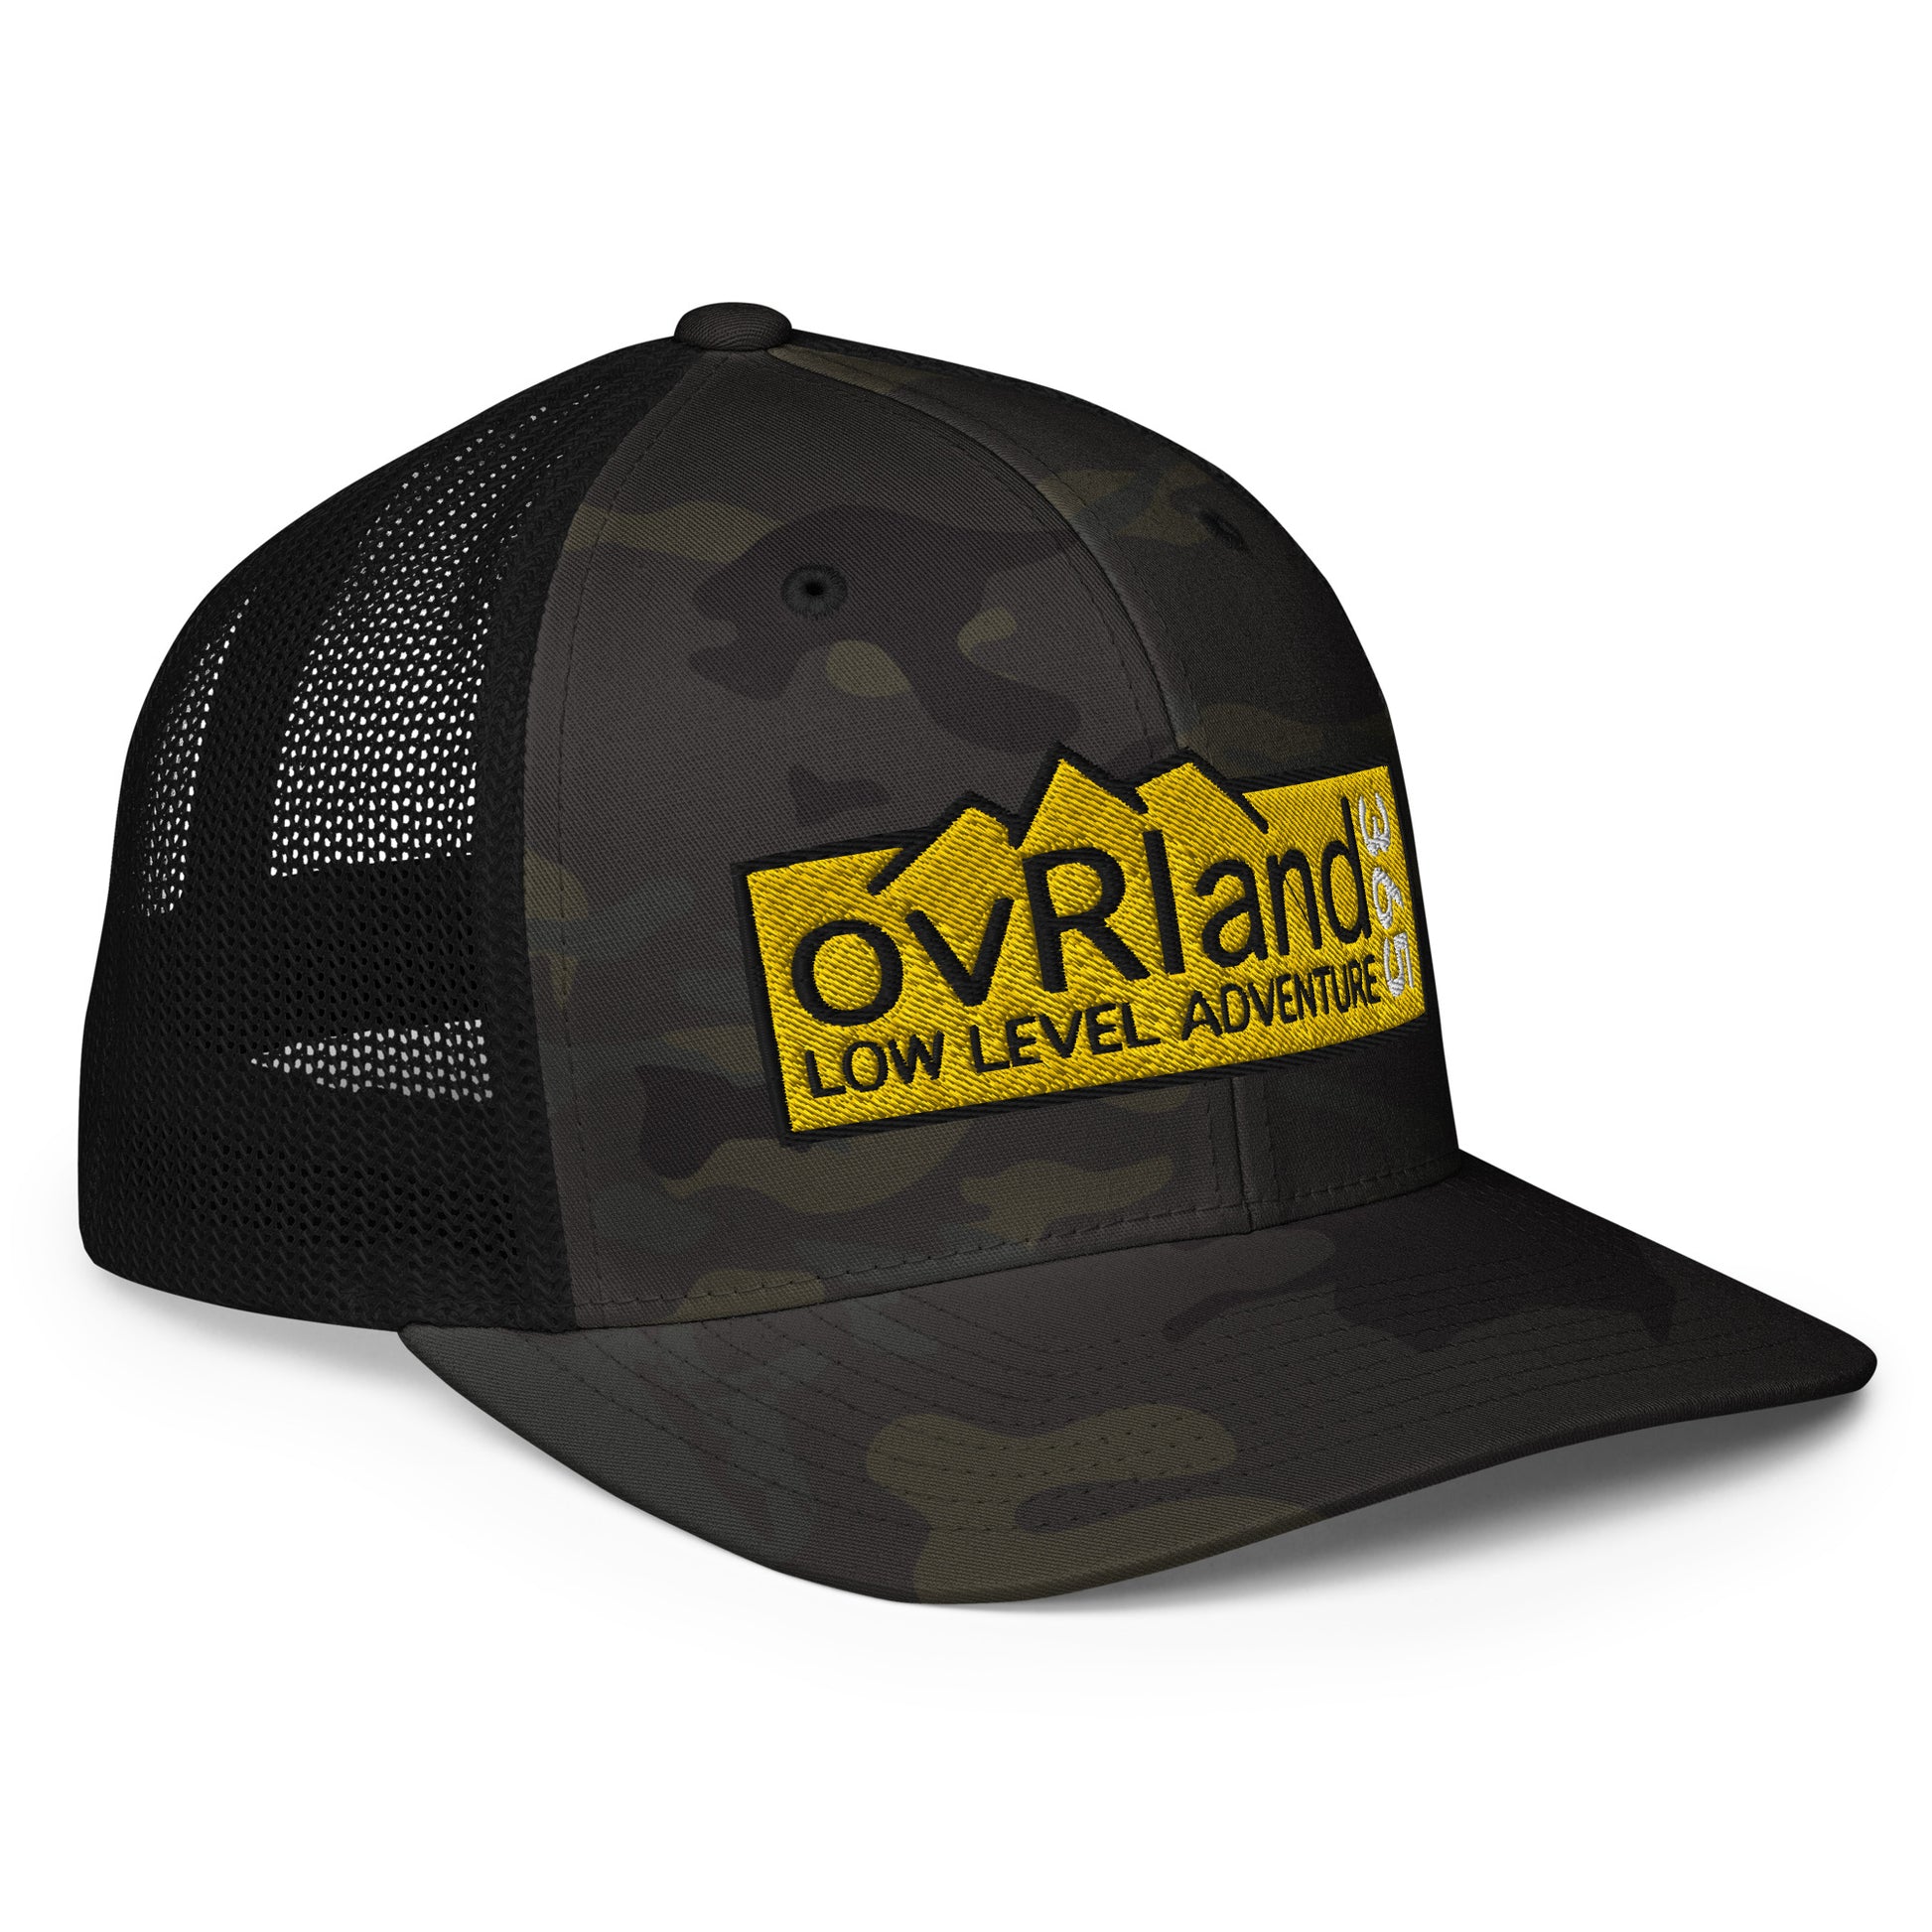 Black MultiCam FlexFit Trucker Cap with our Low Level Adventure yellow logo. side facing. overland365.com